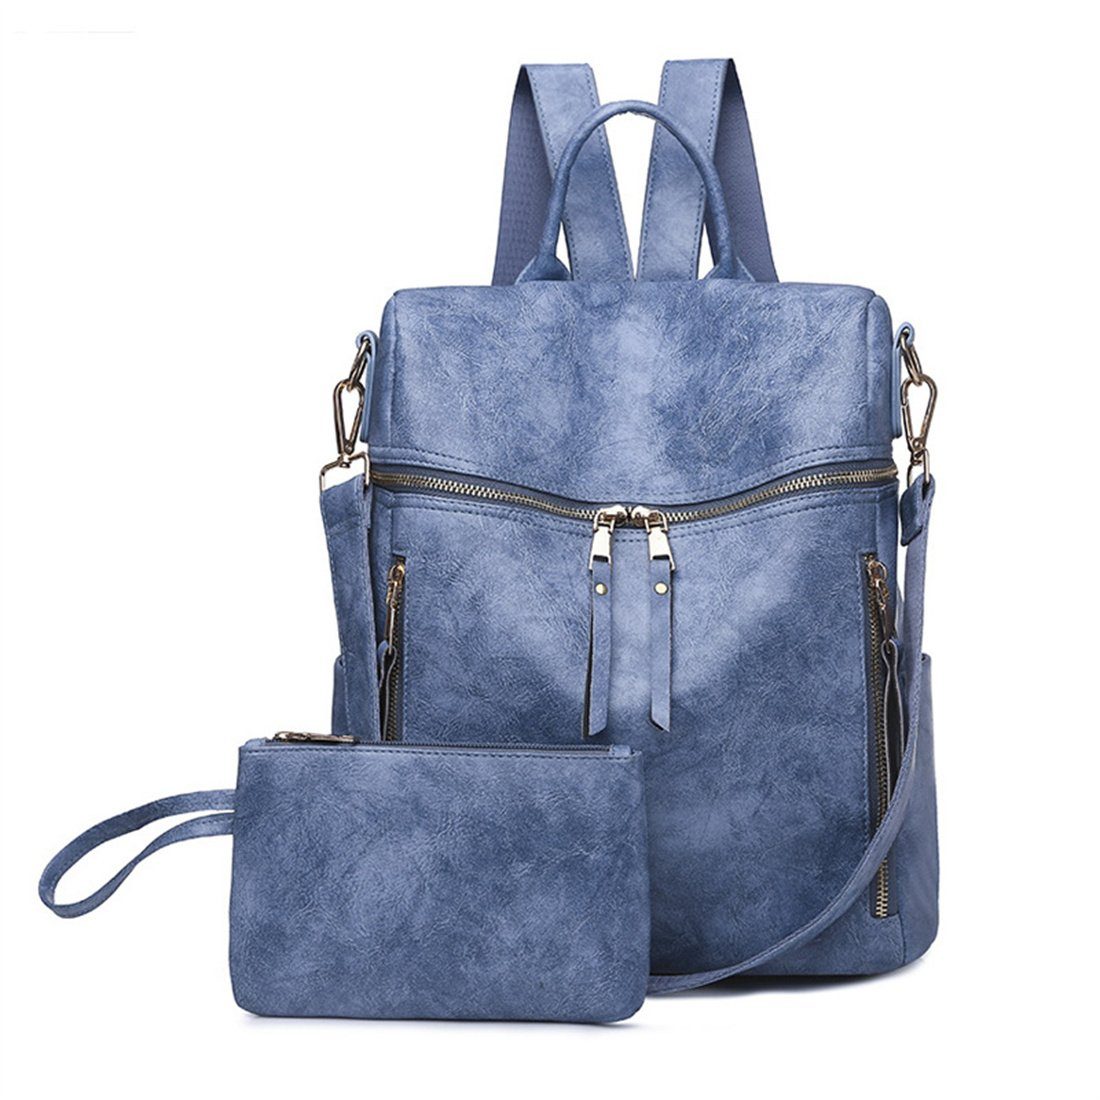 HNDSG Damen Umhängetasche, Cityrucksack große Kapazität Doppel-Rucksack blau Reise-Mode